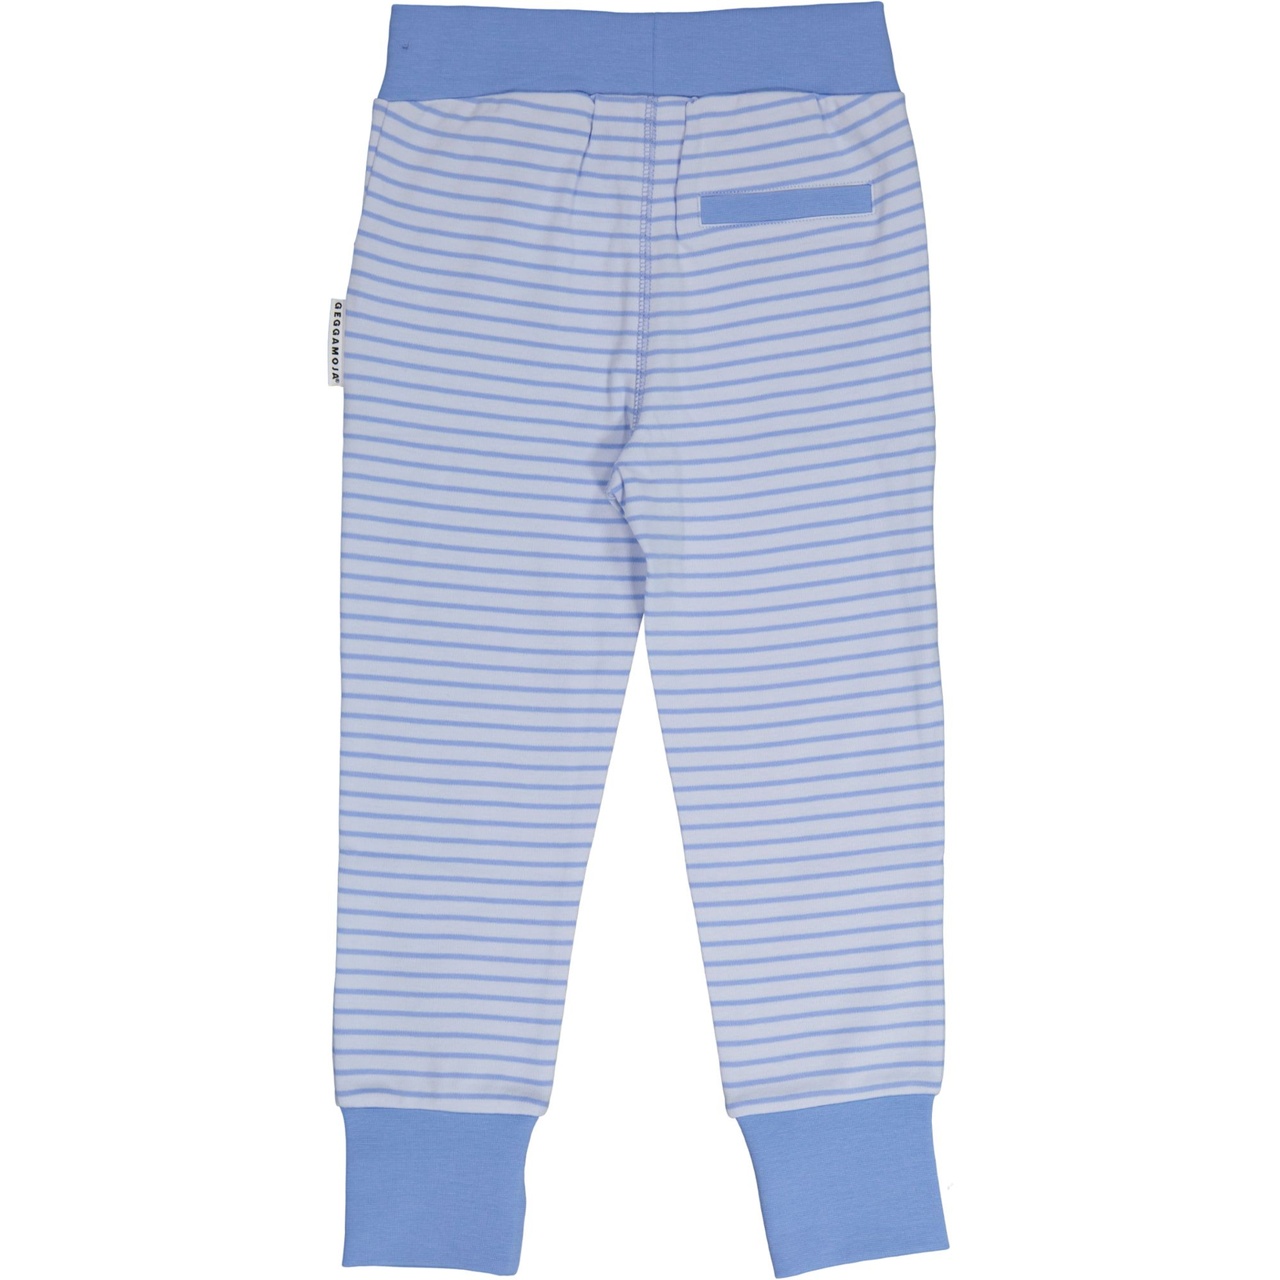 Long pants Light blue/blue  134/140